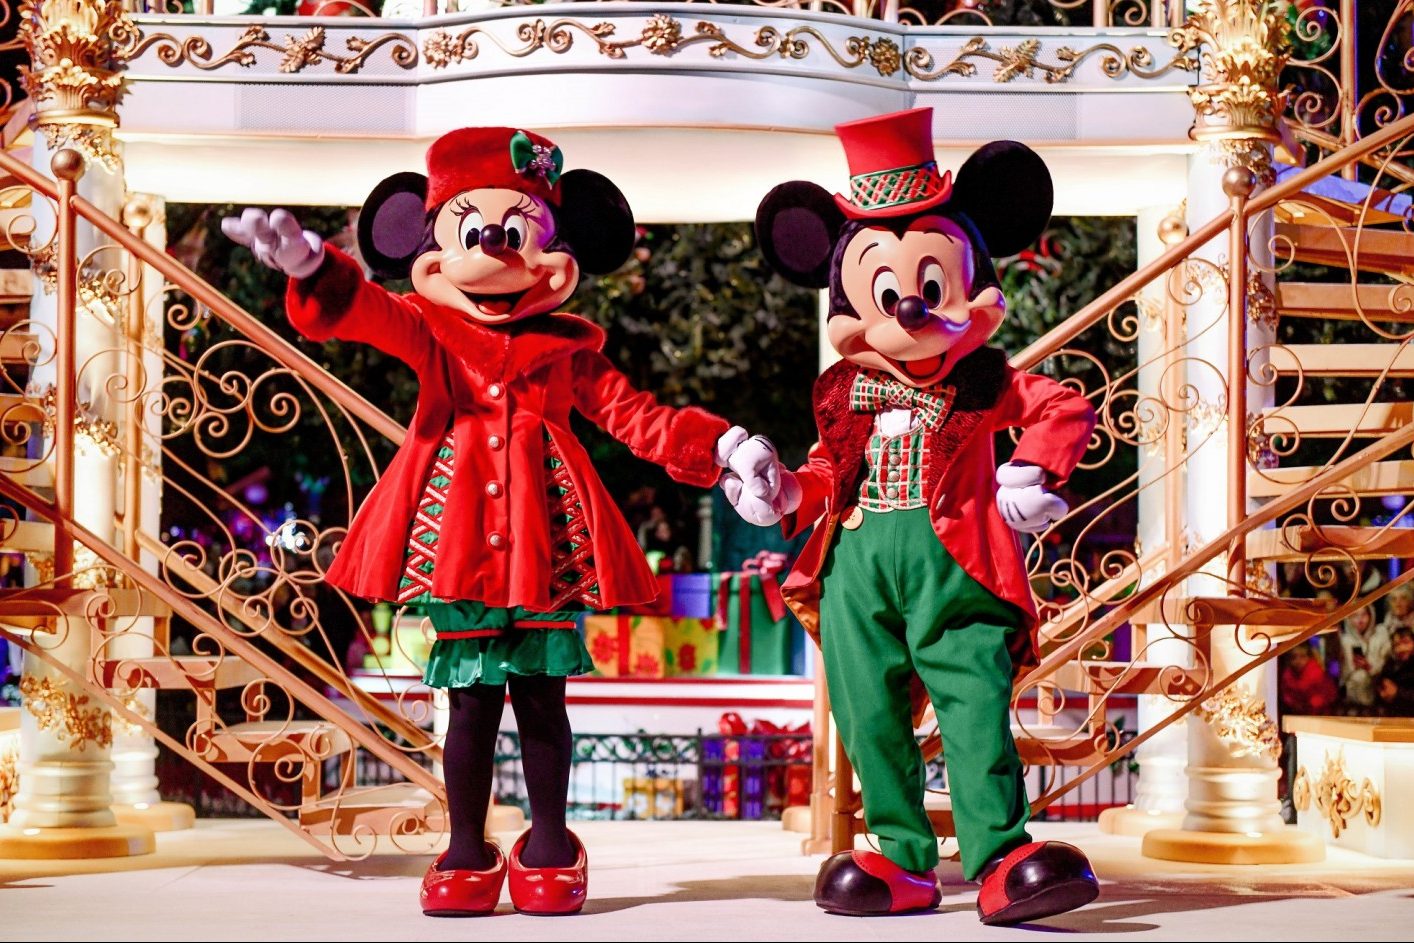 Festive Holidays & Christmas Celebration | Disneyland